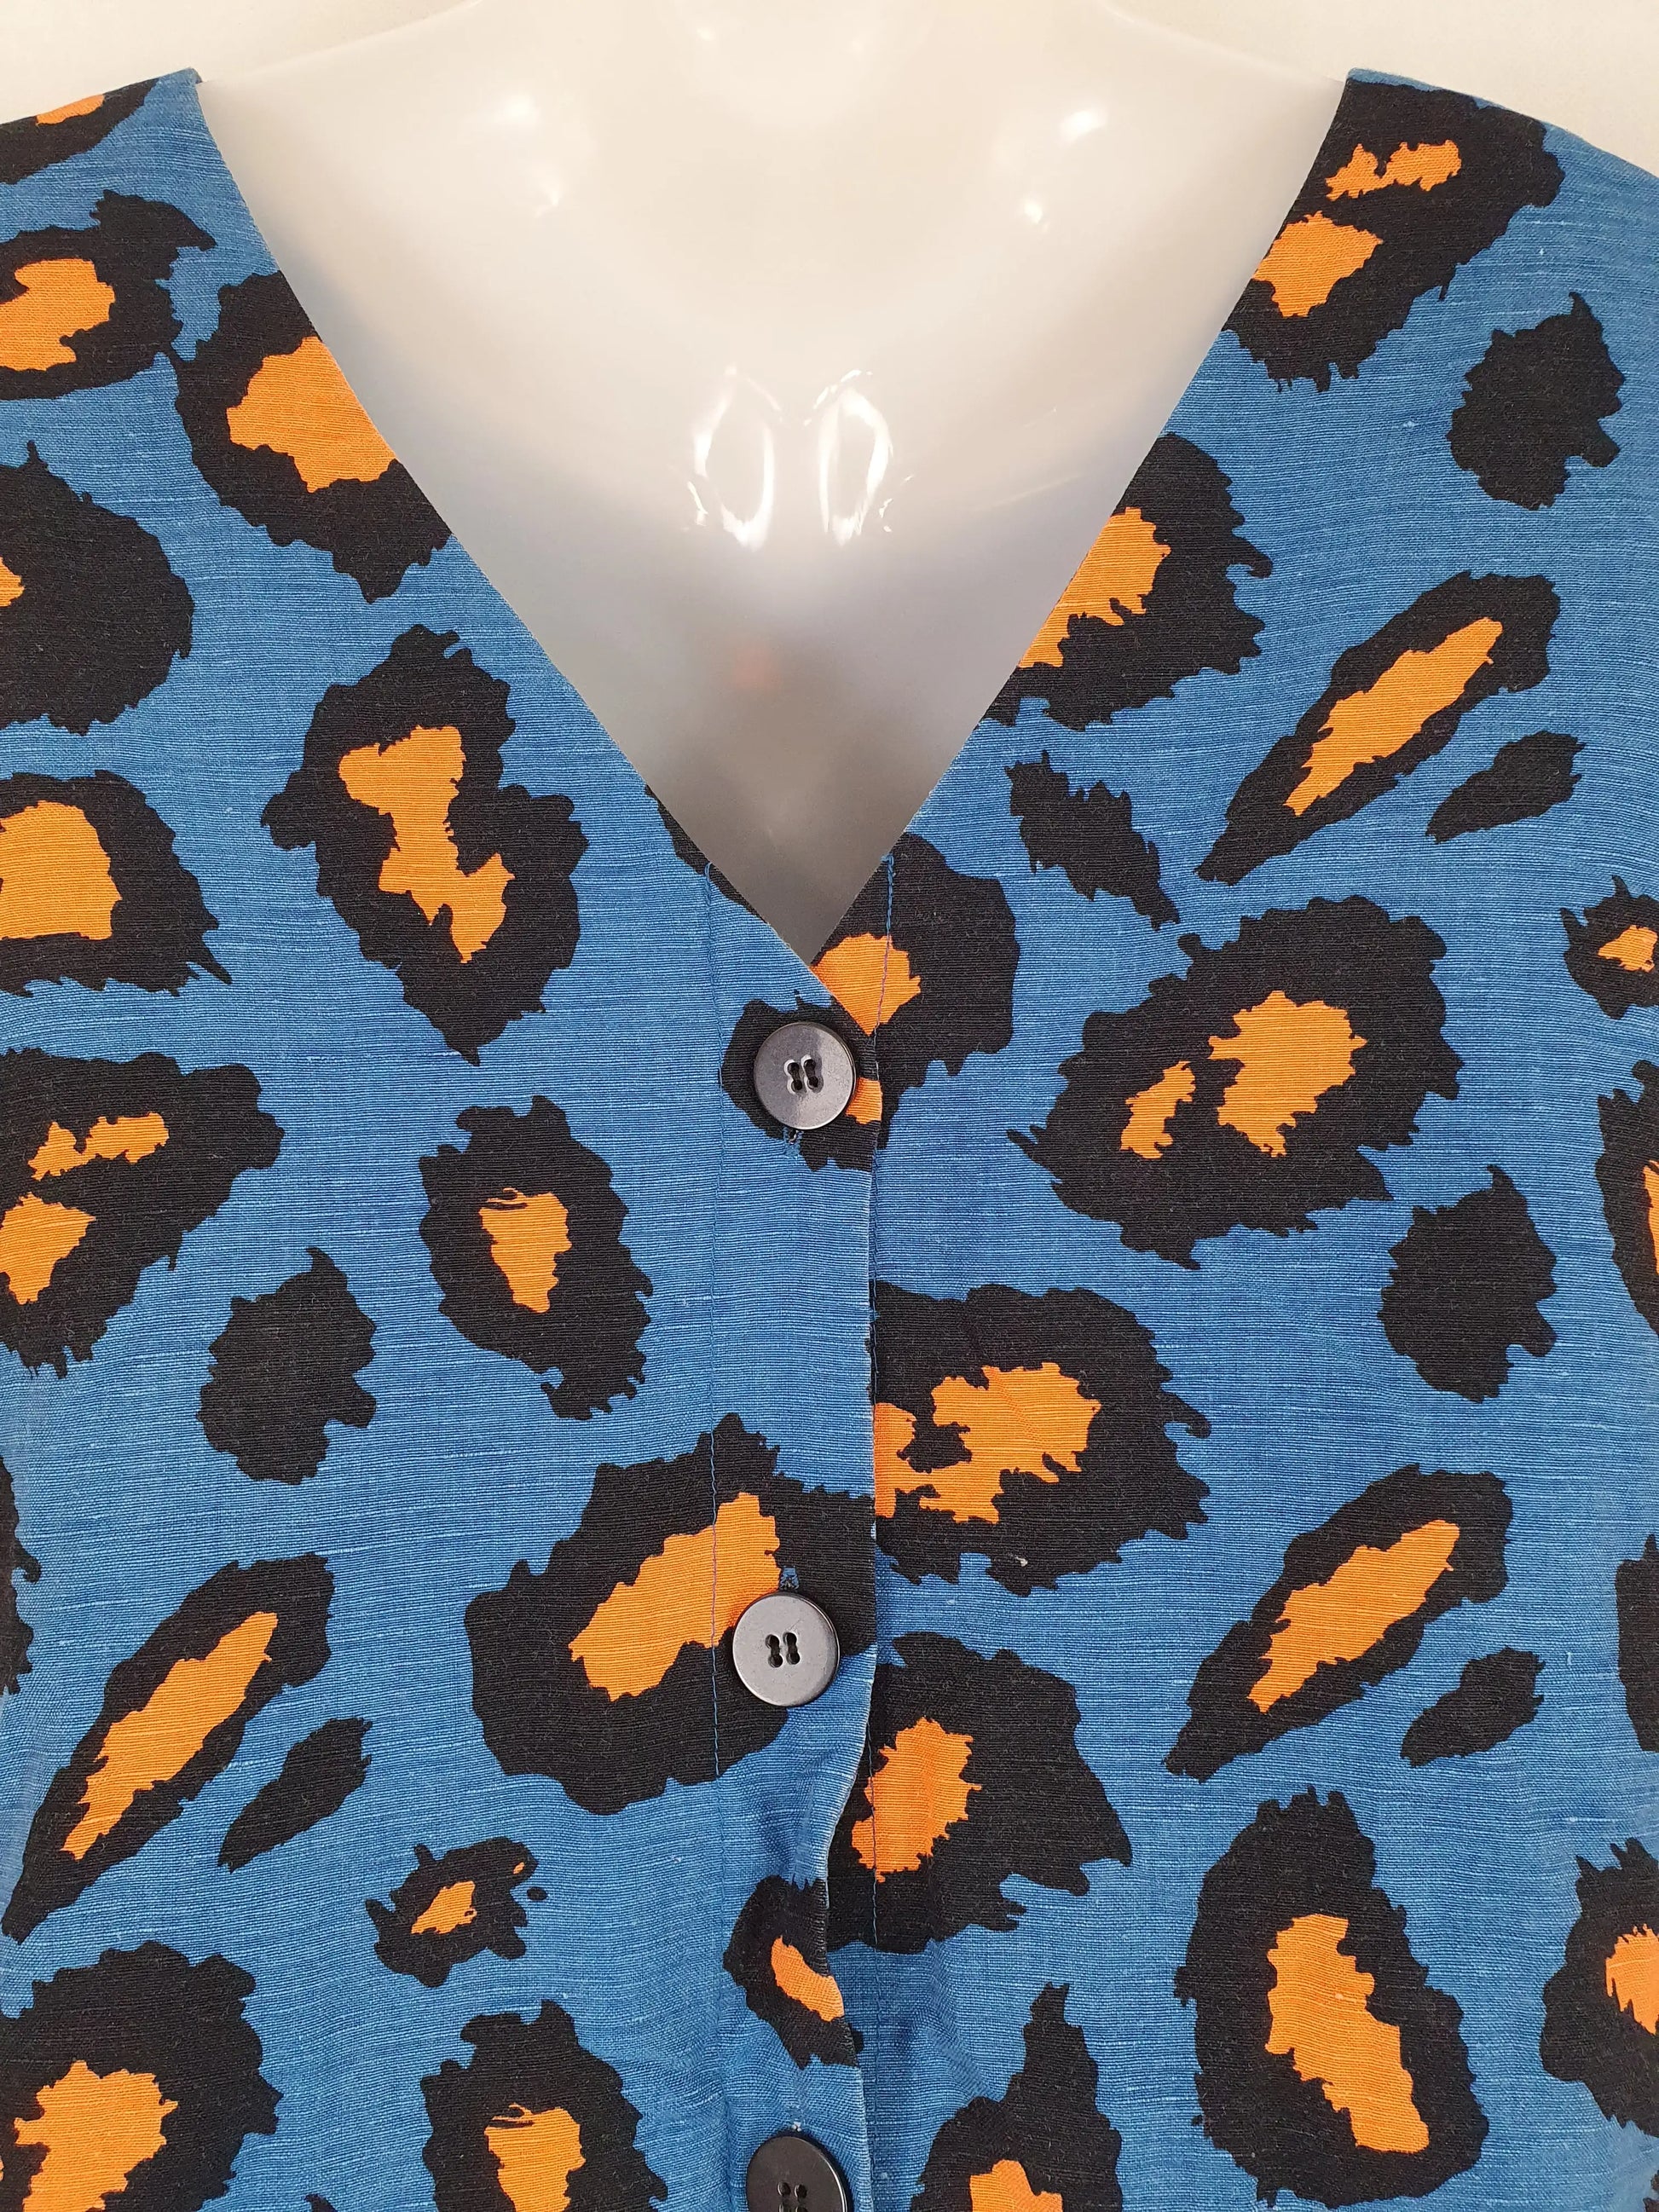 Gorman Cheetah Mini Dress Size 8 by SwapUp-Online Second Hand Store-Online Thrift Store